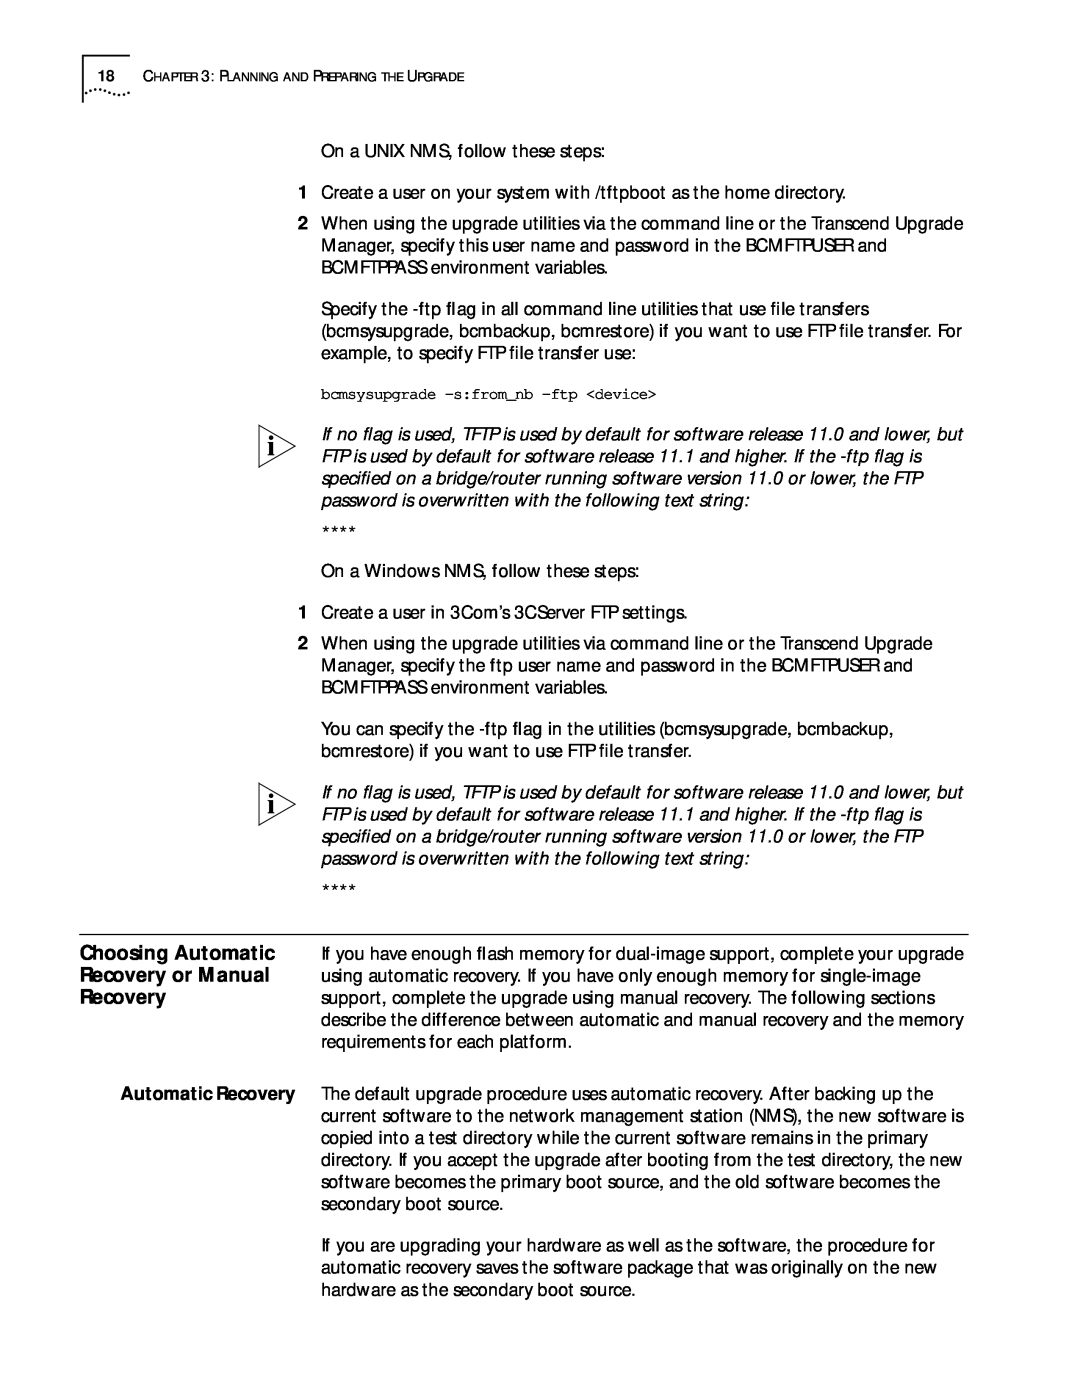 3Com ENTERPRISE OS 11.3 manual On a UNIX NMS, follow these steps 